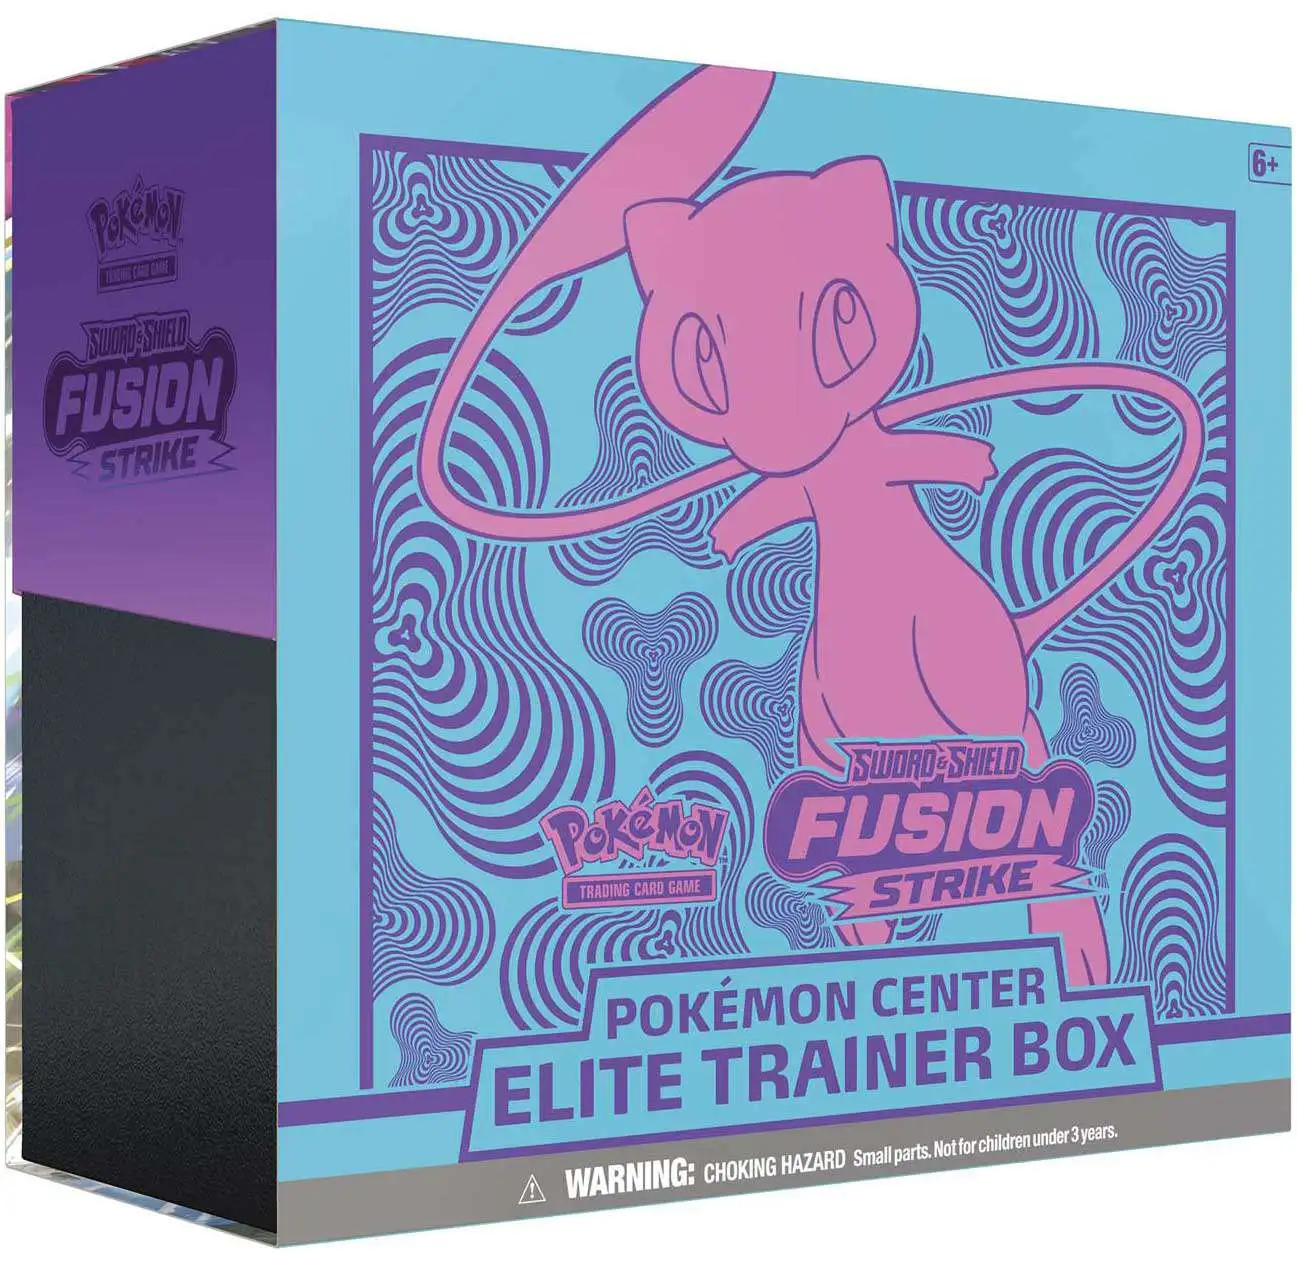 Funko Pop! Games: Pokémon Mew #643 Vinyl Figure DAMAGED